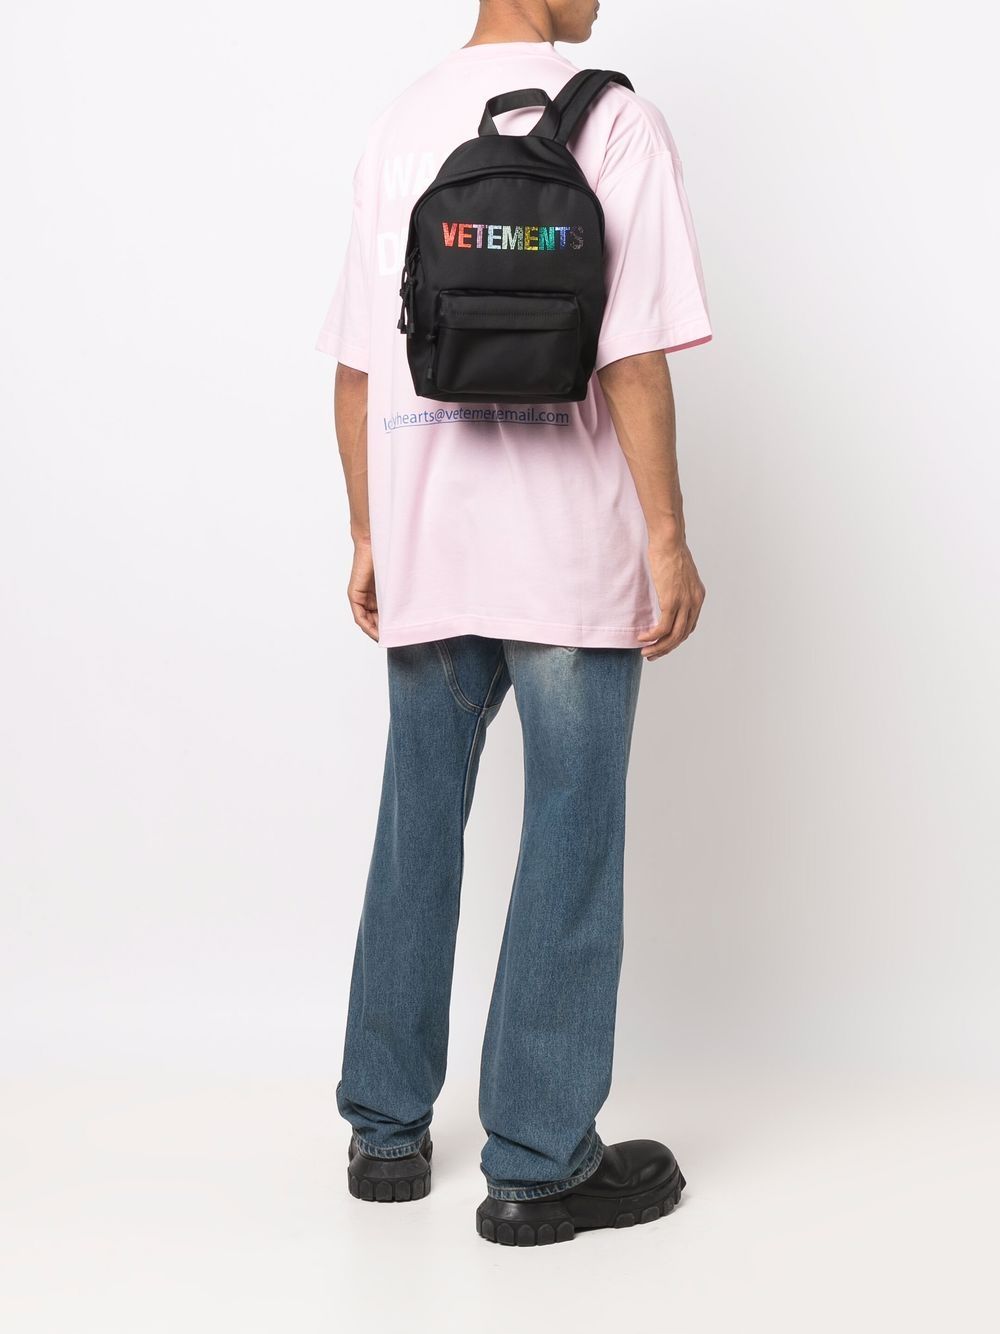 фото Vetements маленький рюкзак с логотипом